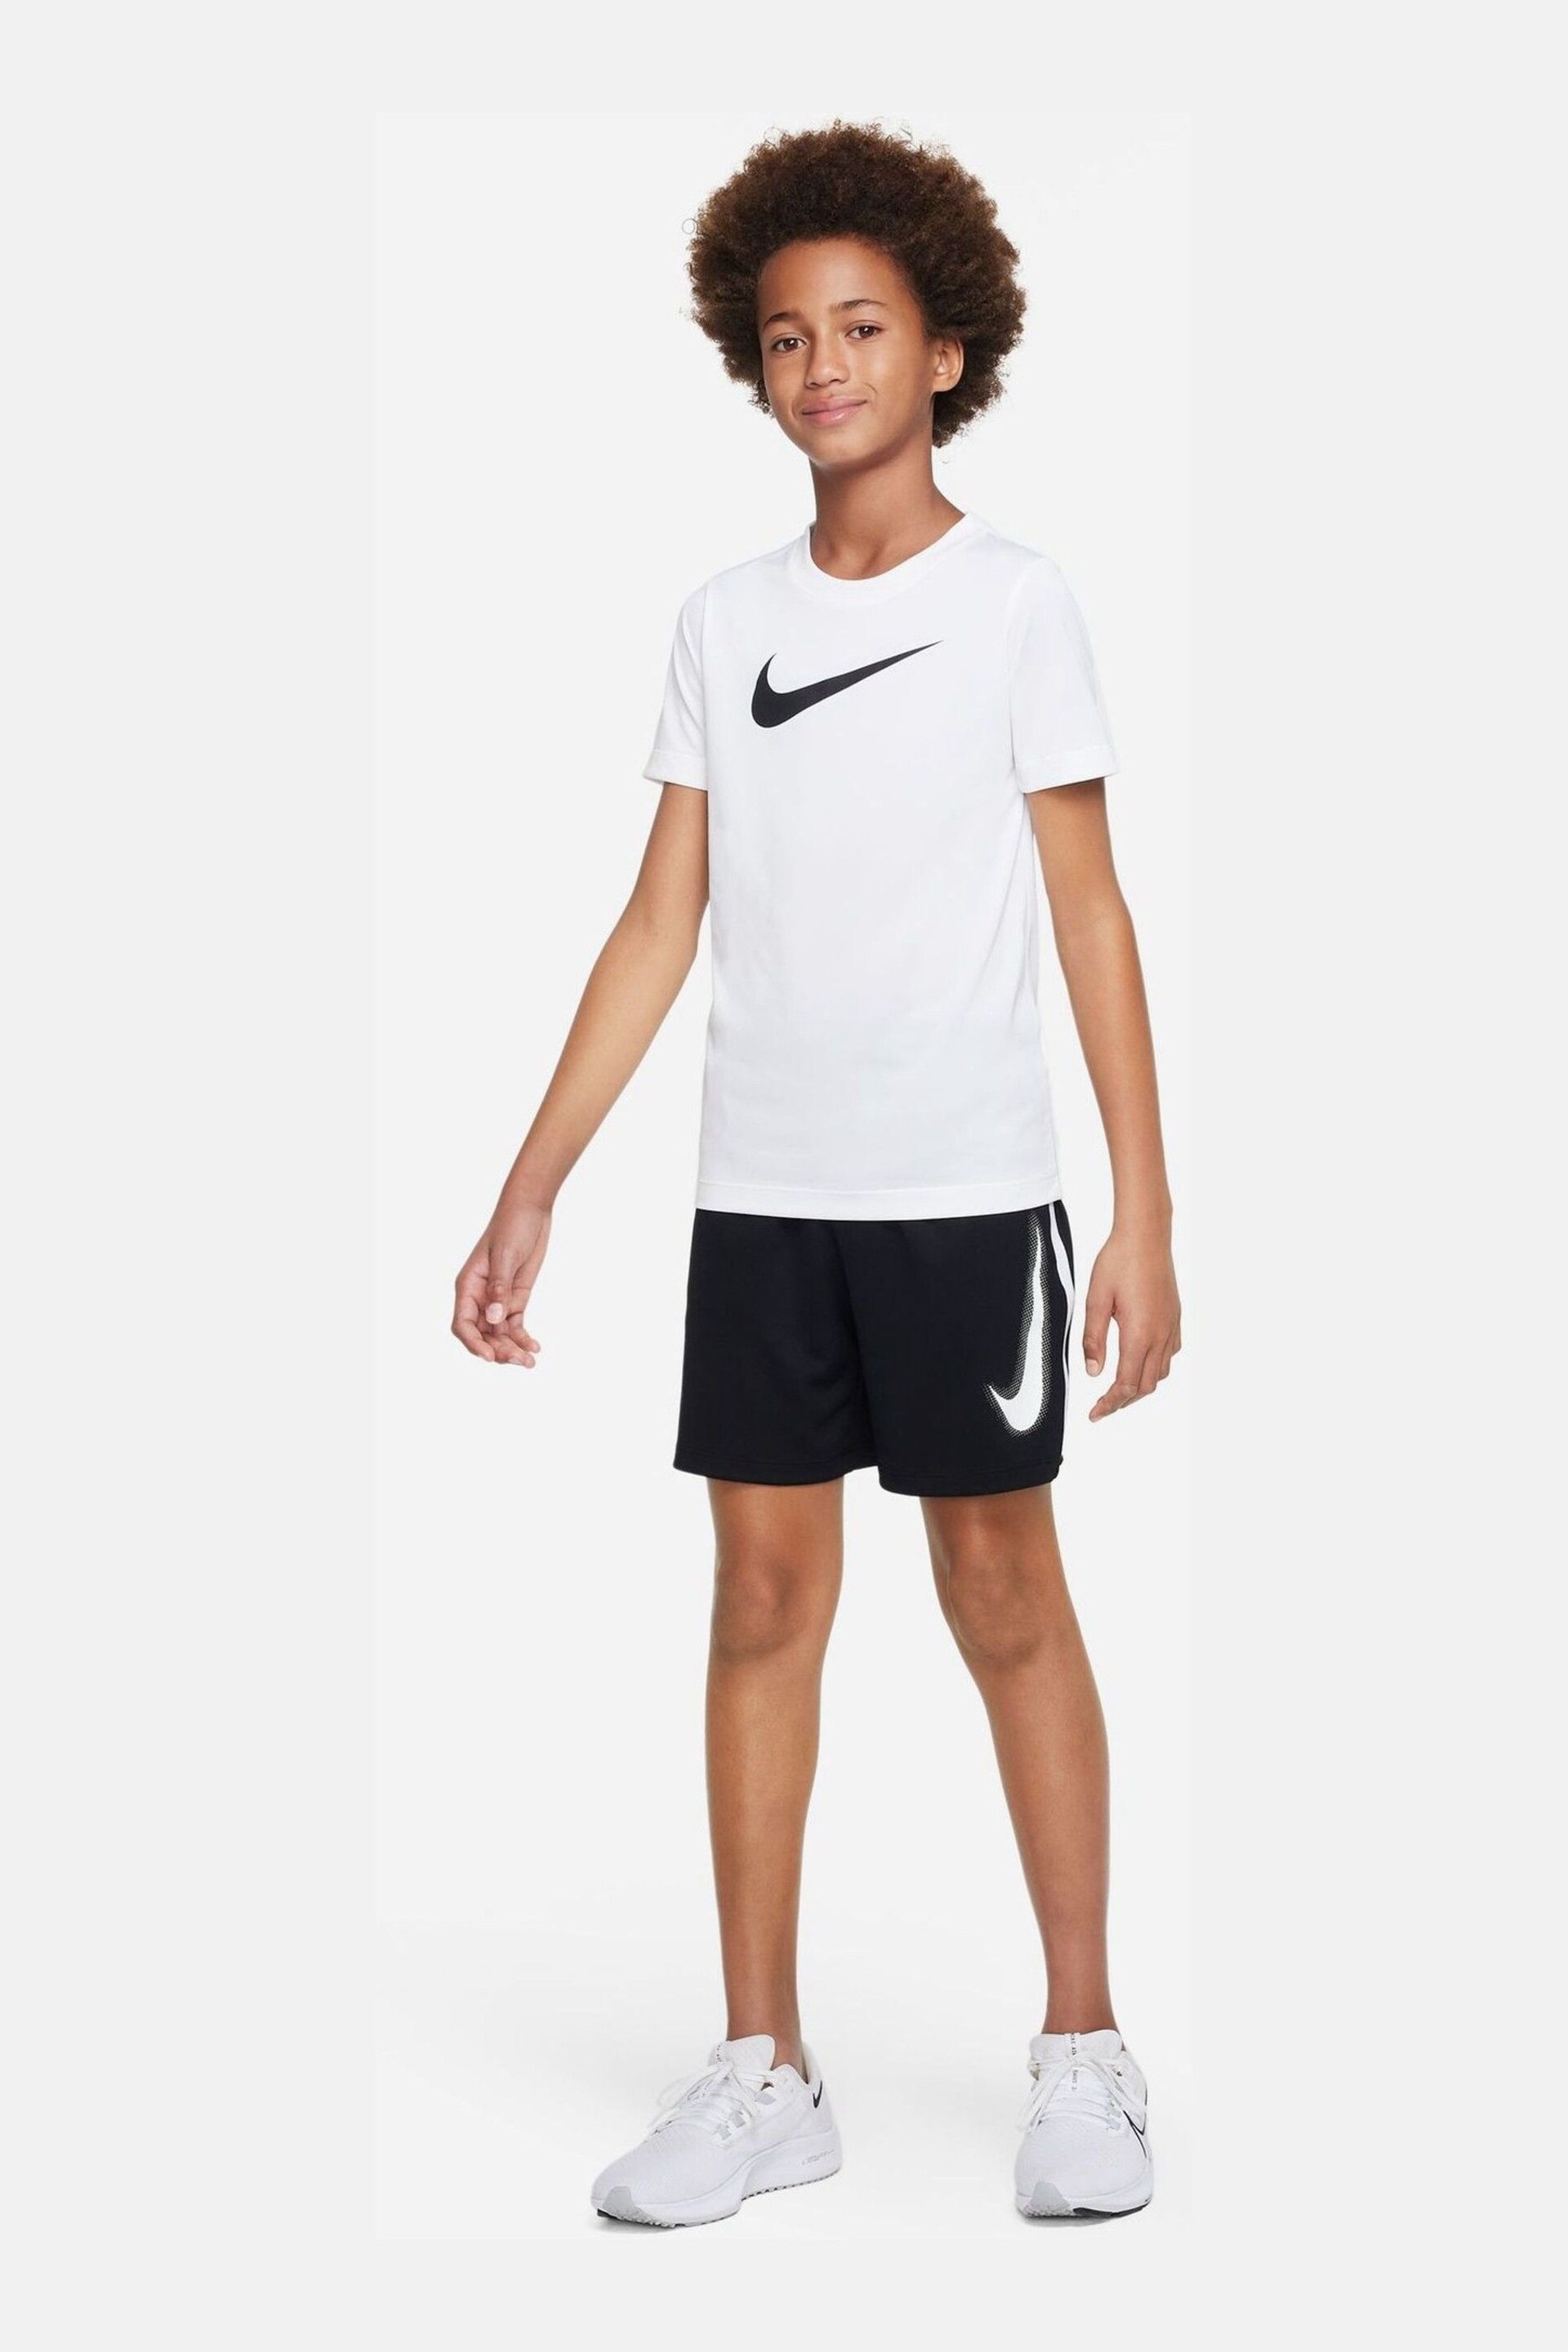 Nike Black Dri-FIT Multi+ Graphic Training Shorts - Image 7 of 7